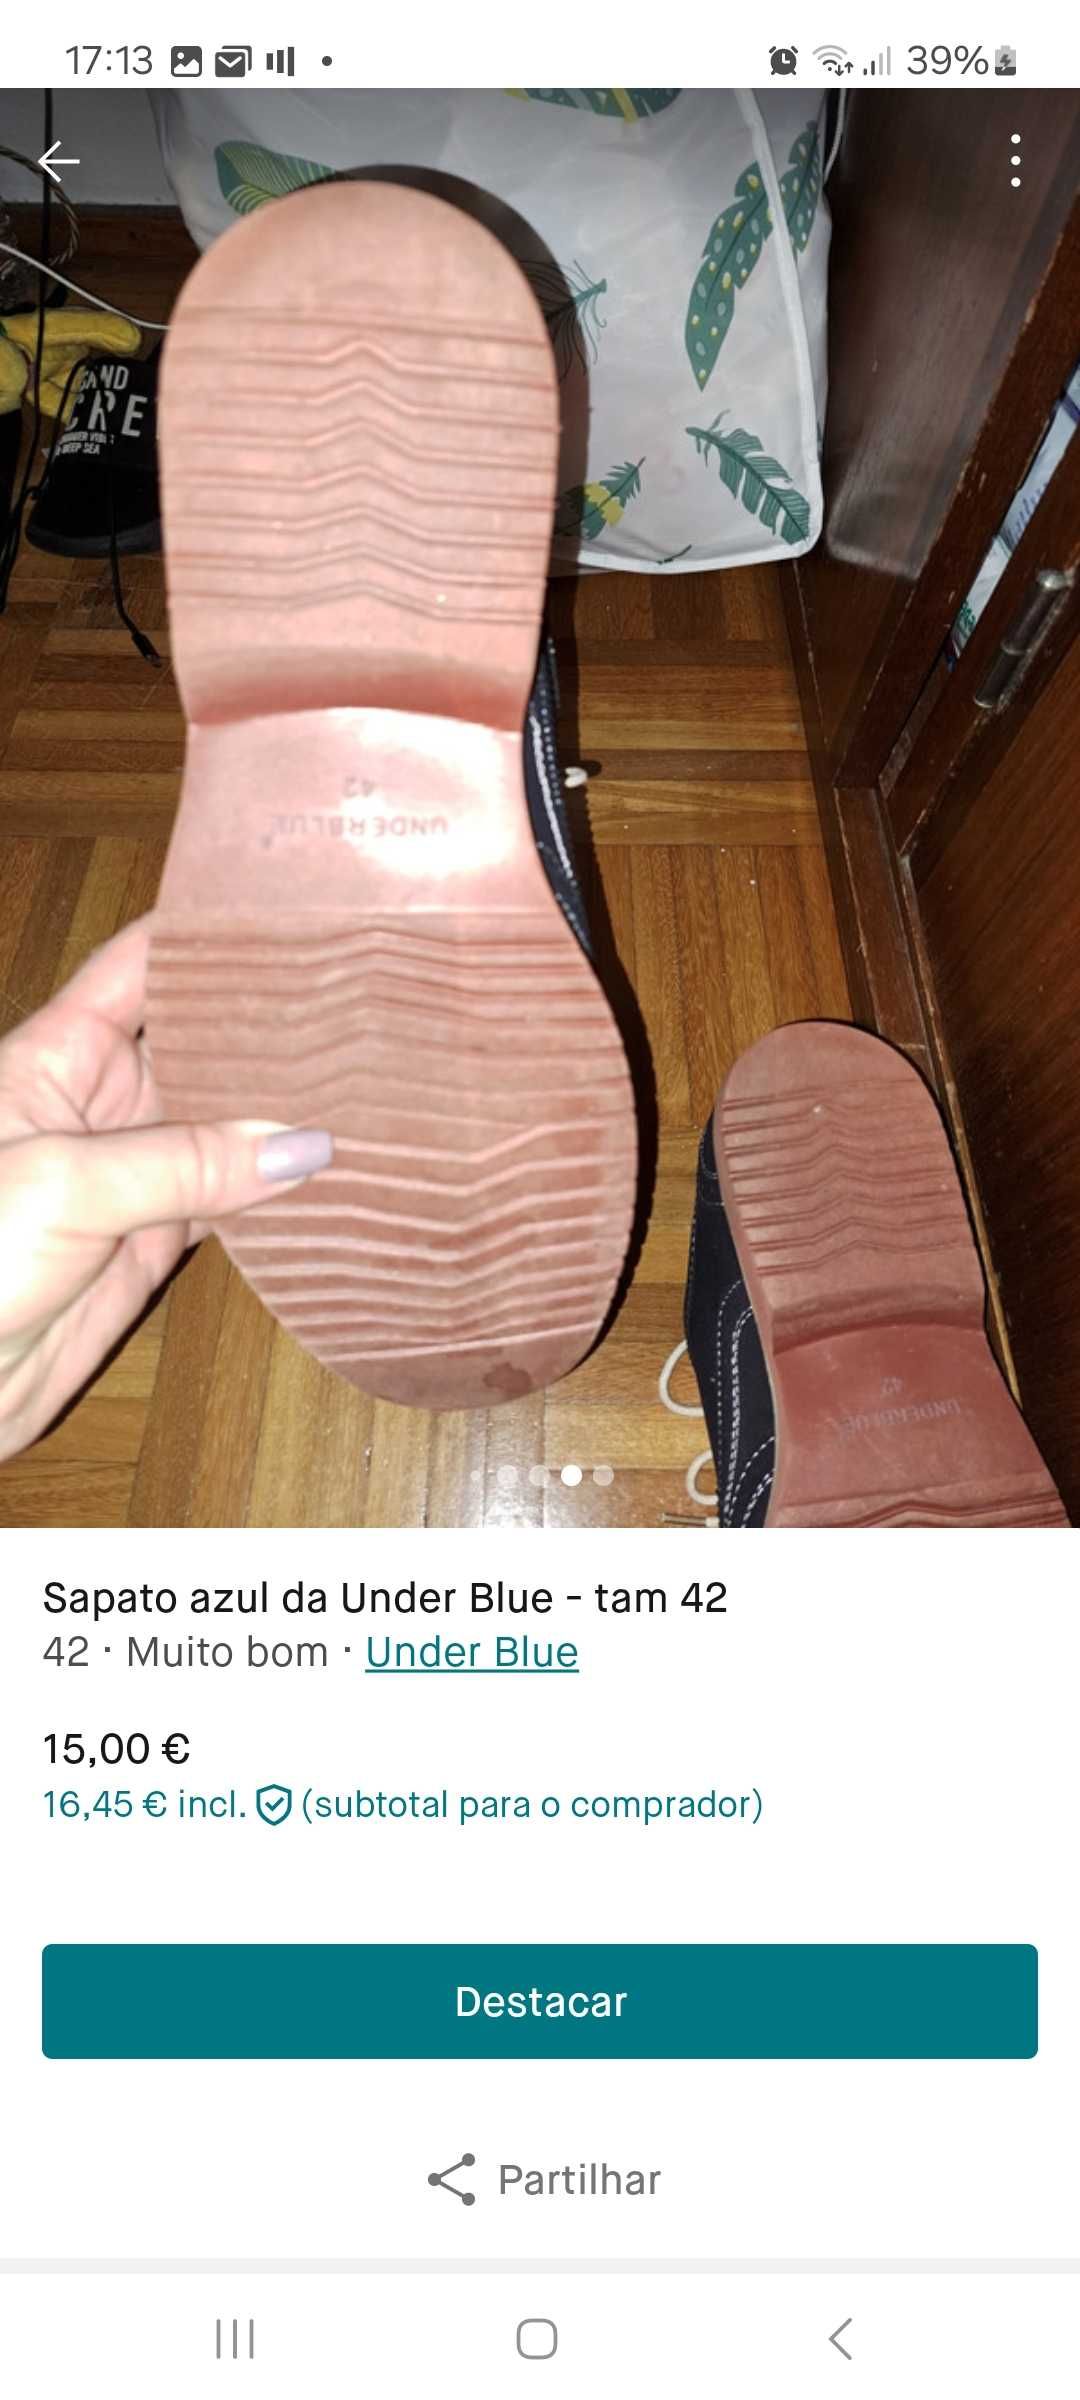 Sapato Underblue azul marinho tam 42